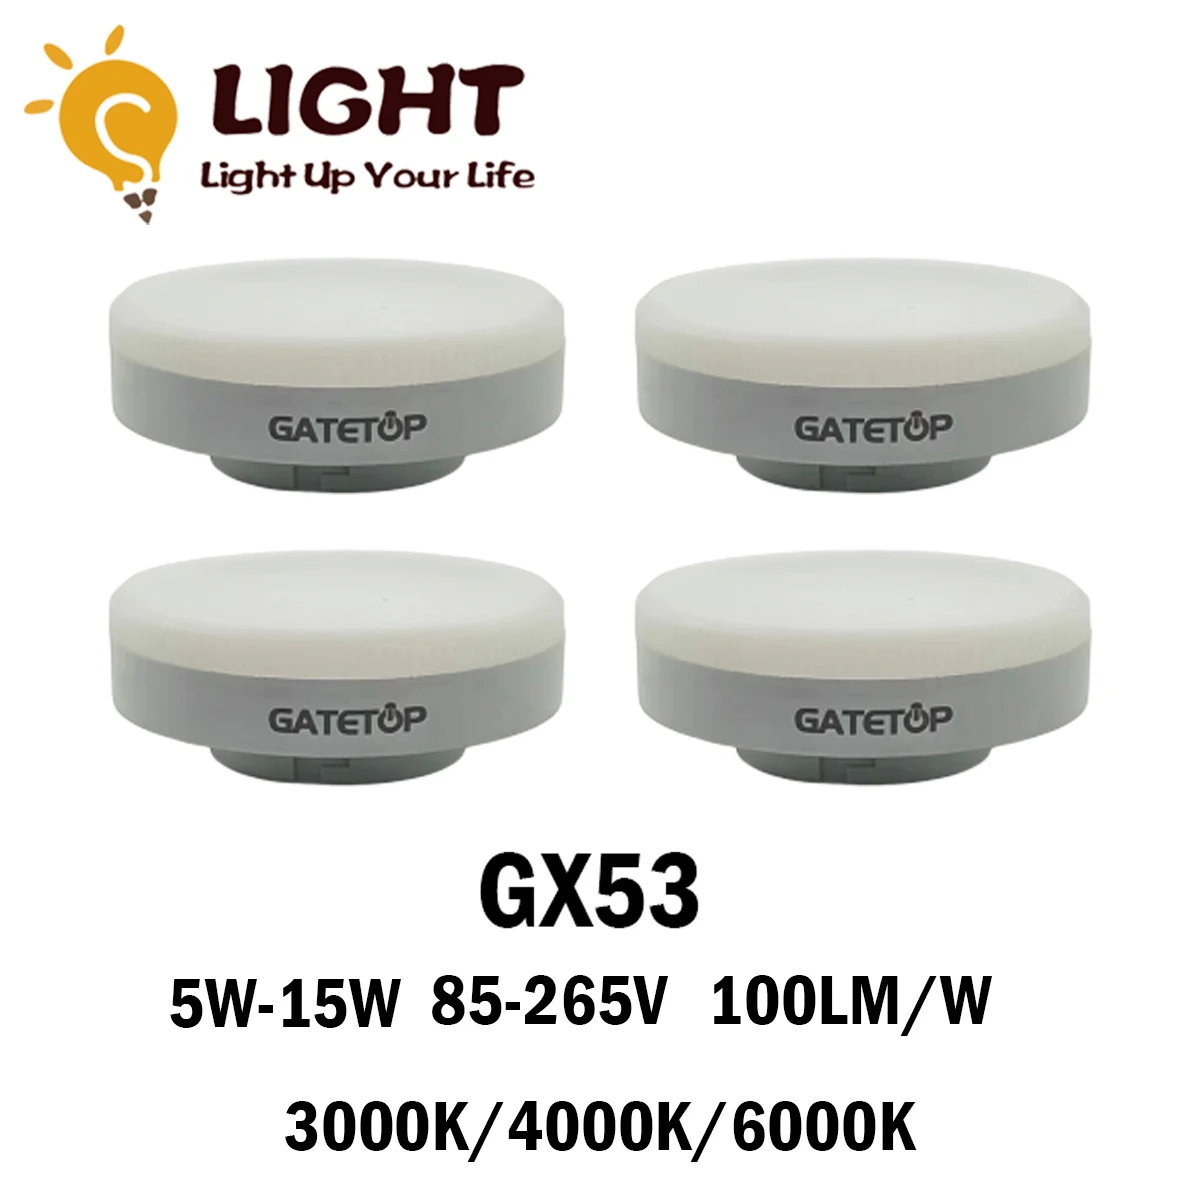 

8pcs LED spotlight GX53 wardrobe light grille light AC85-265V 5W-15W no flickering 100LM/W warm white light suitable for kitchen